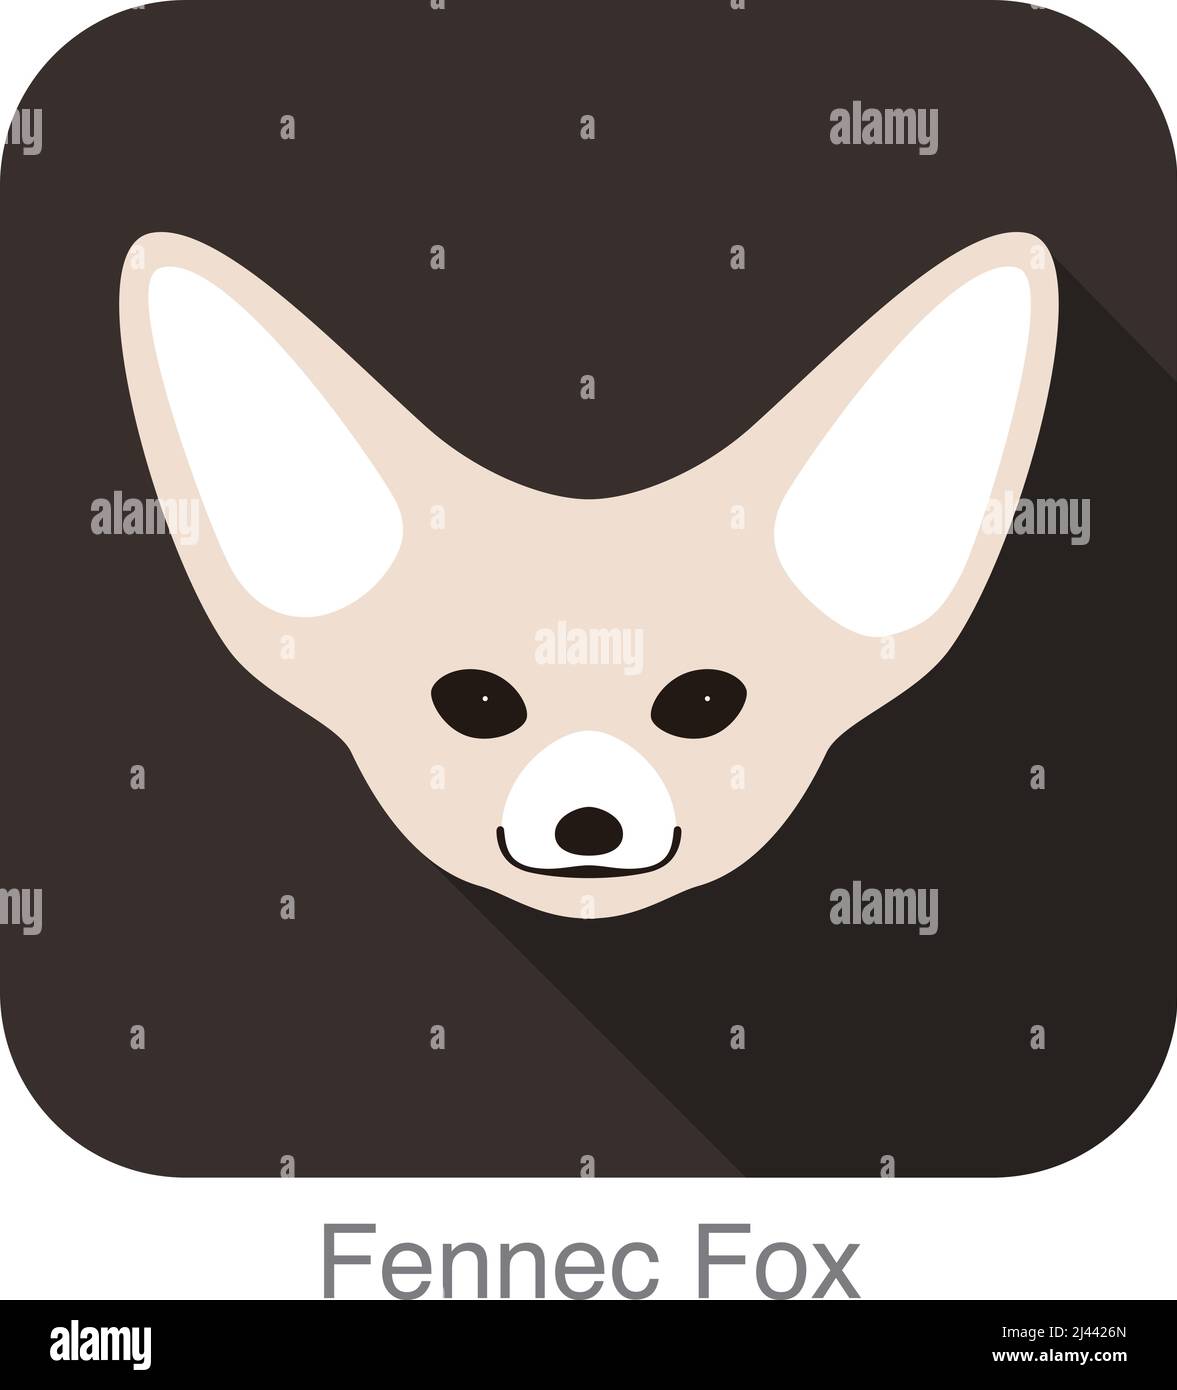 Fennec fox face flat icon design, vector illustration Stock Vector